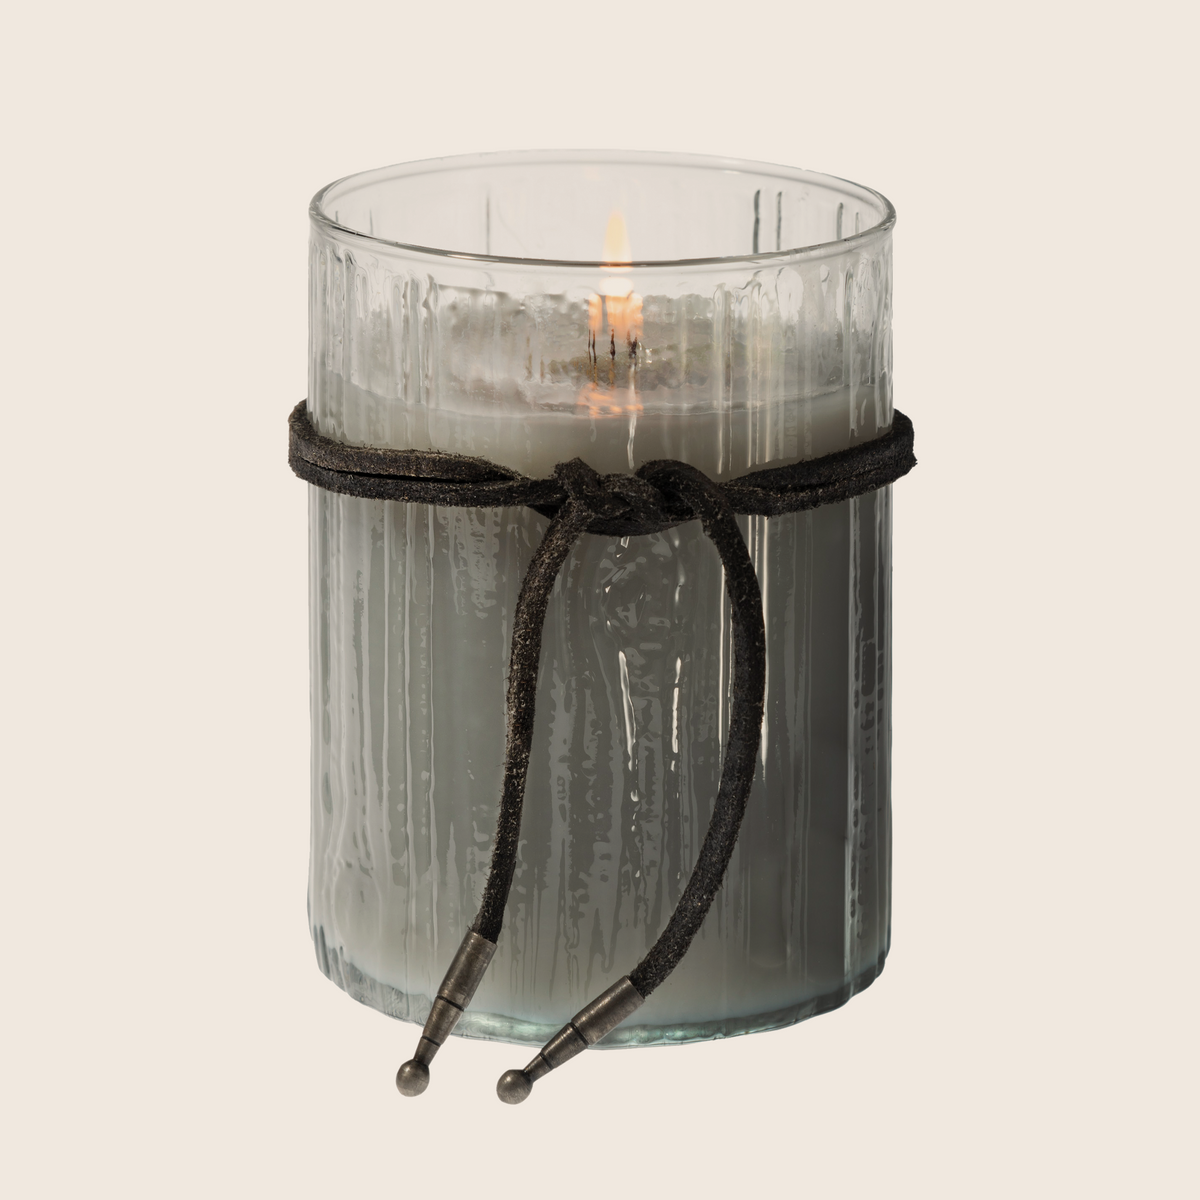 New! Sunkissed Sandalwood - Votive Glass Candle